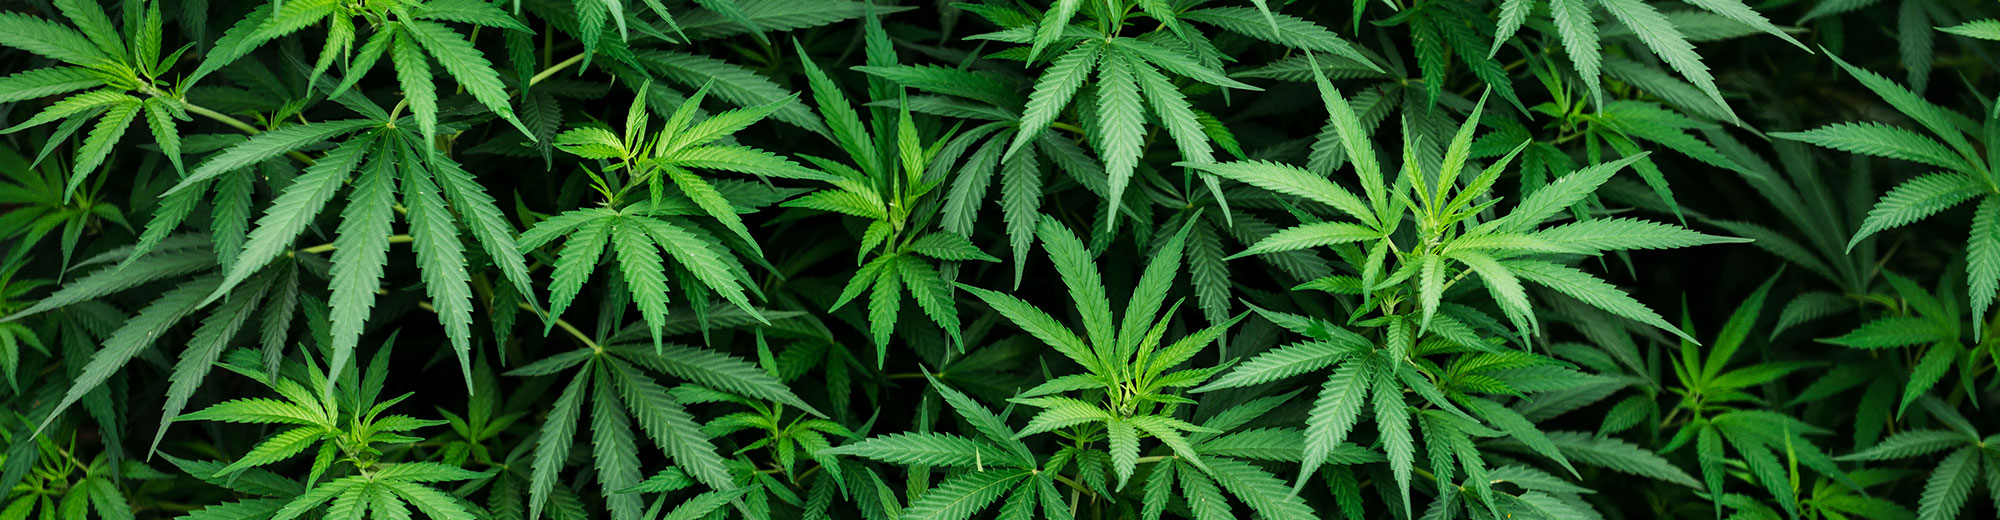 cannabis image